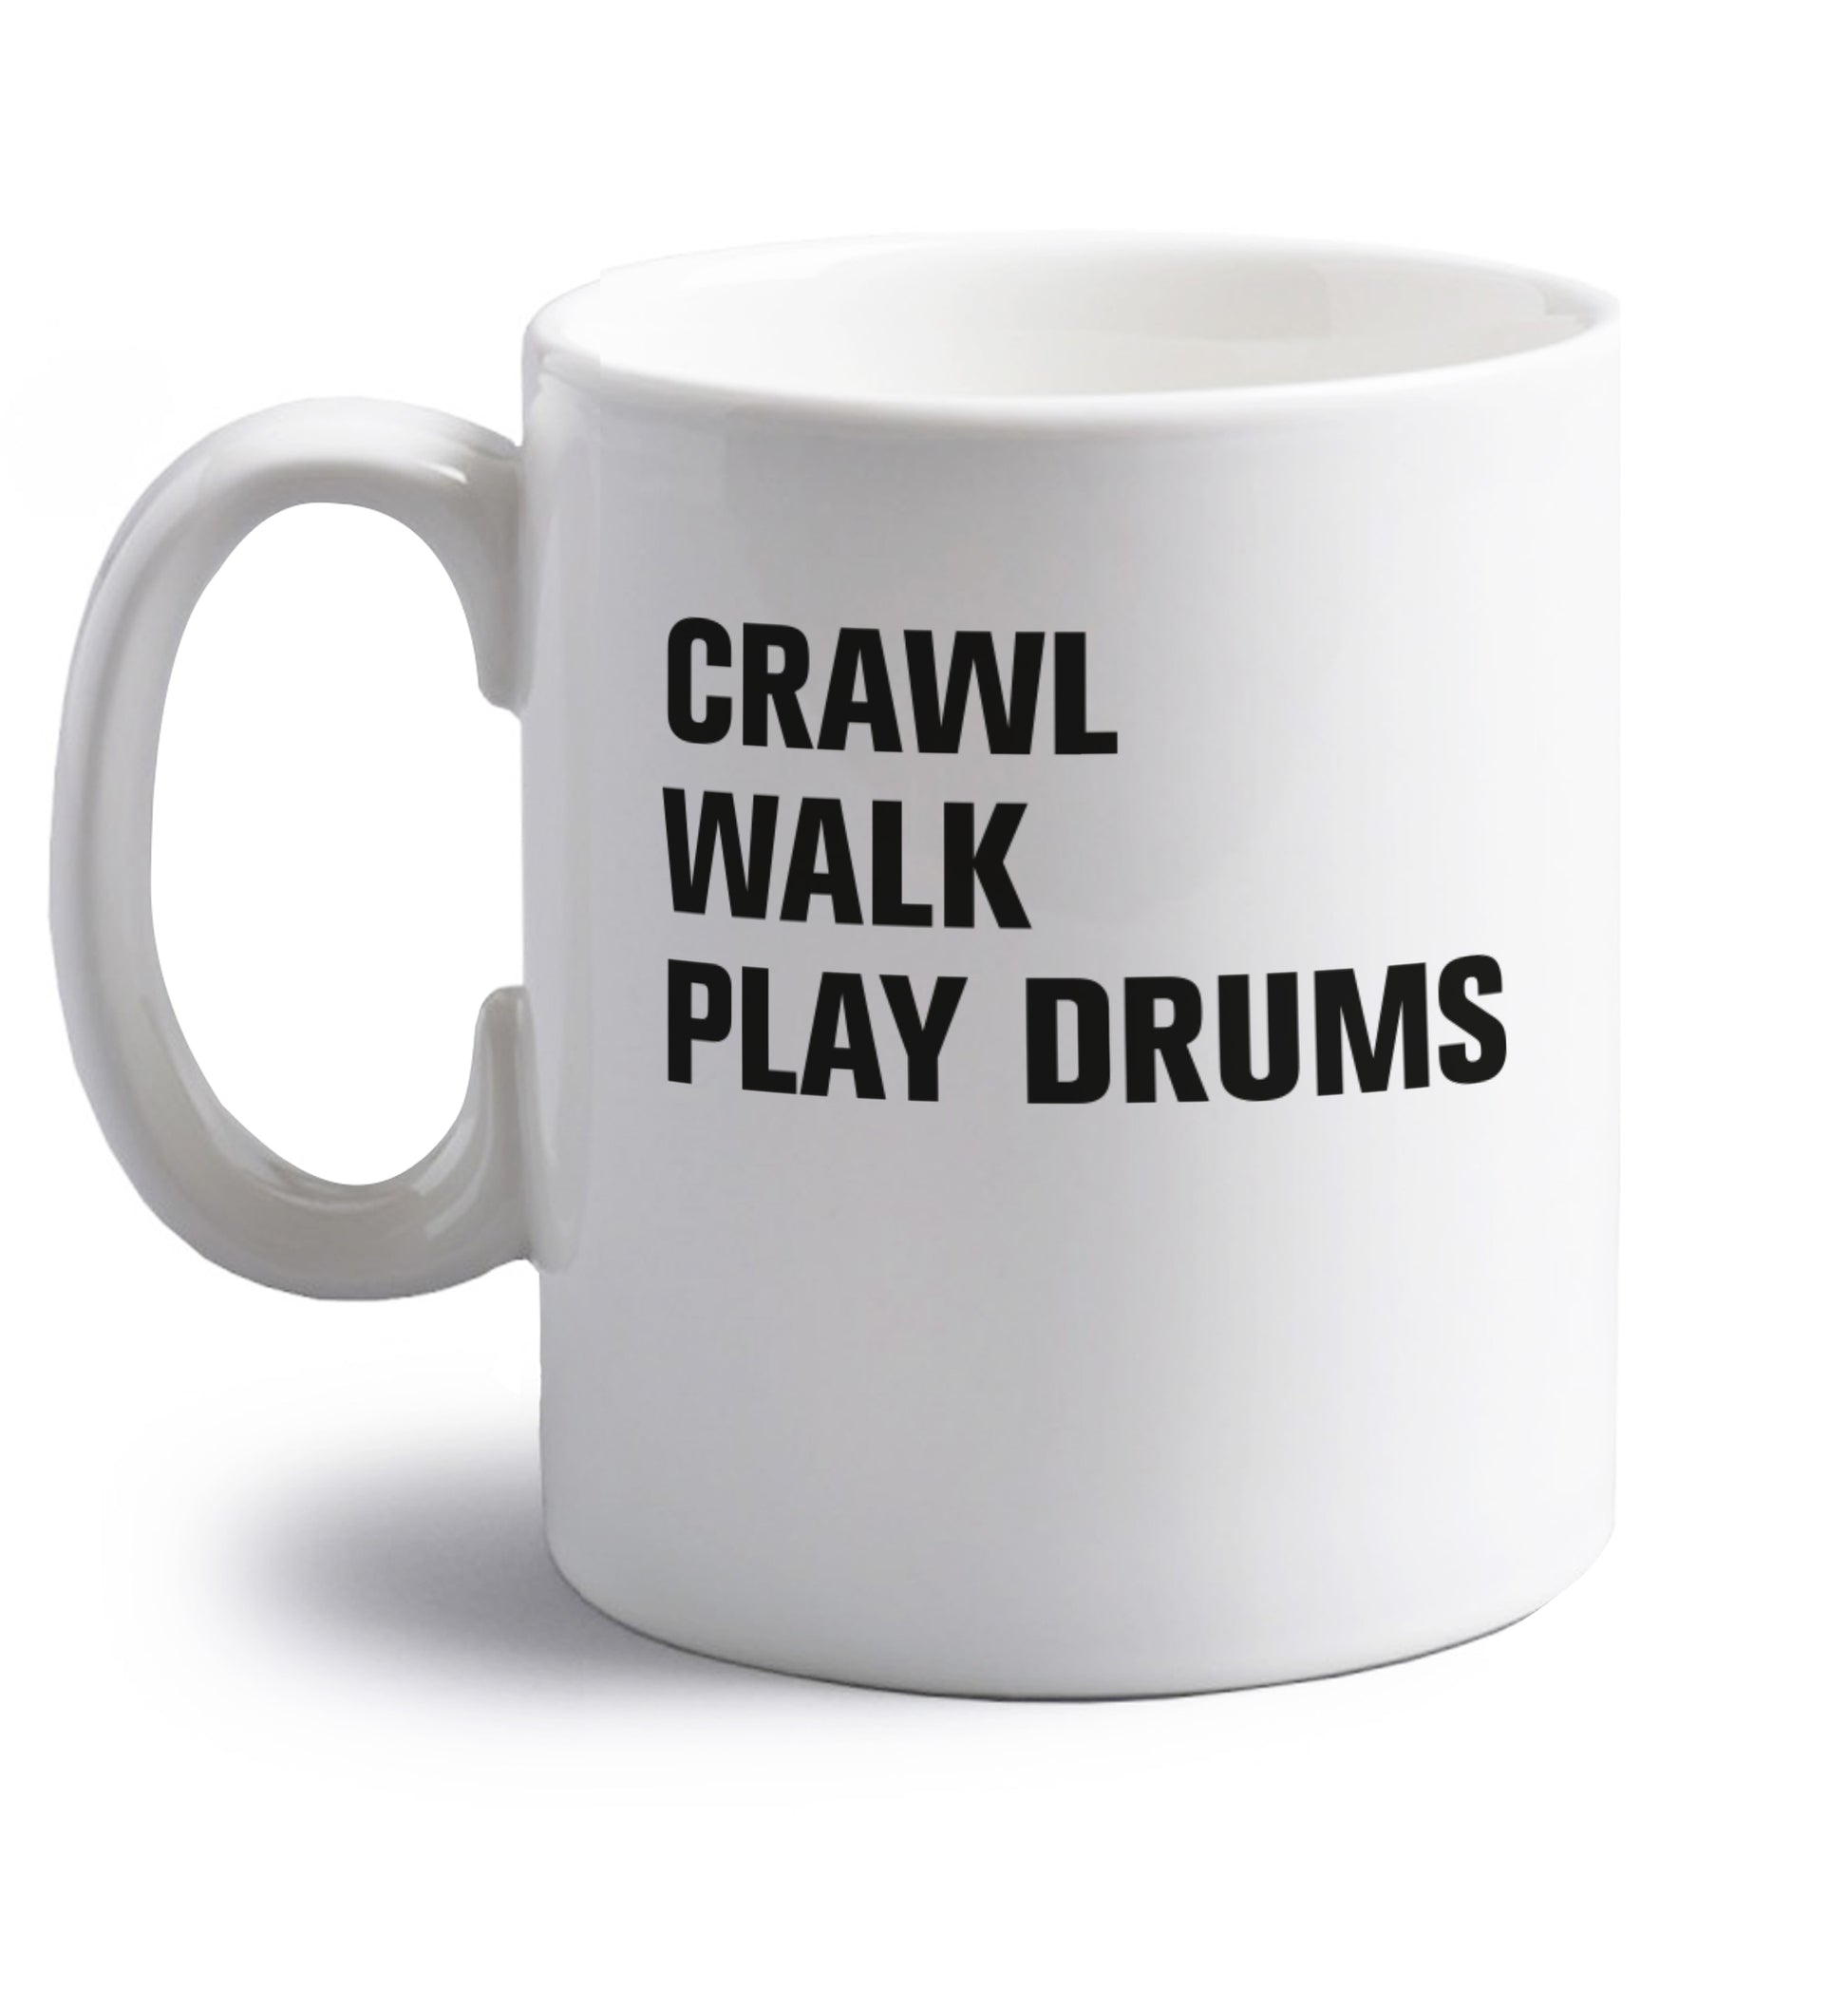 Crawl walk play drums right handed white ceramic mug 